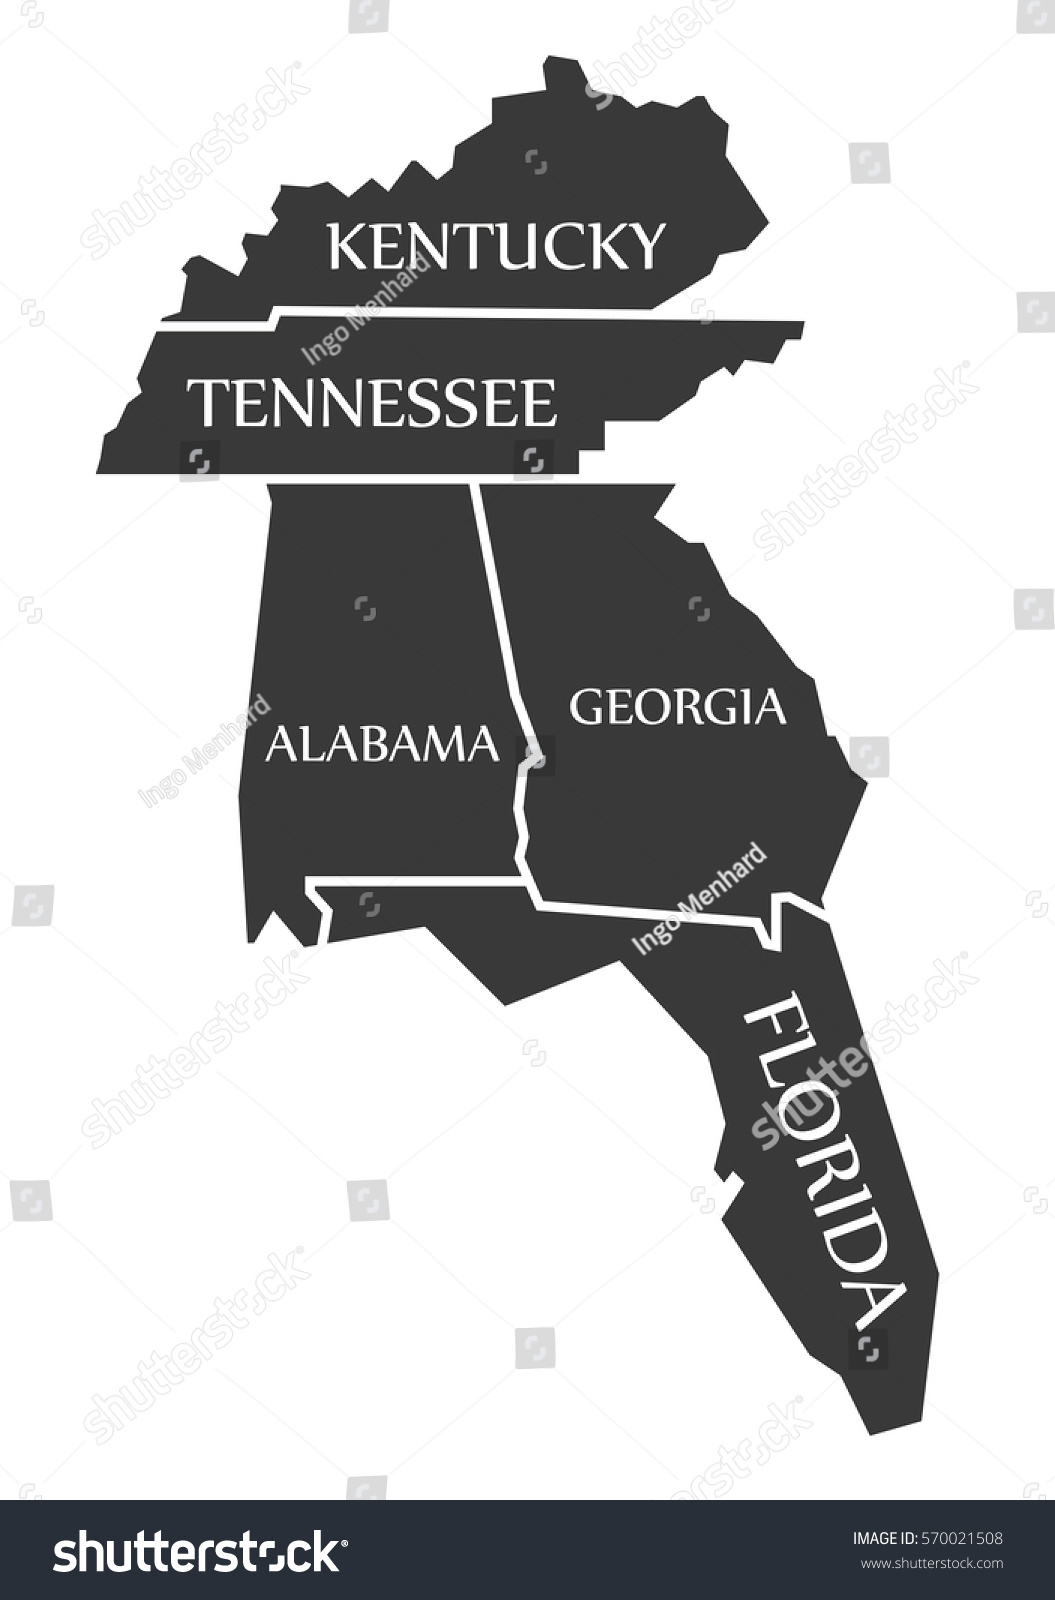 Bivariate Map Of Alabama Georgia And Florida Showing Social Download Scientific Diagram